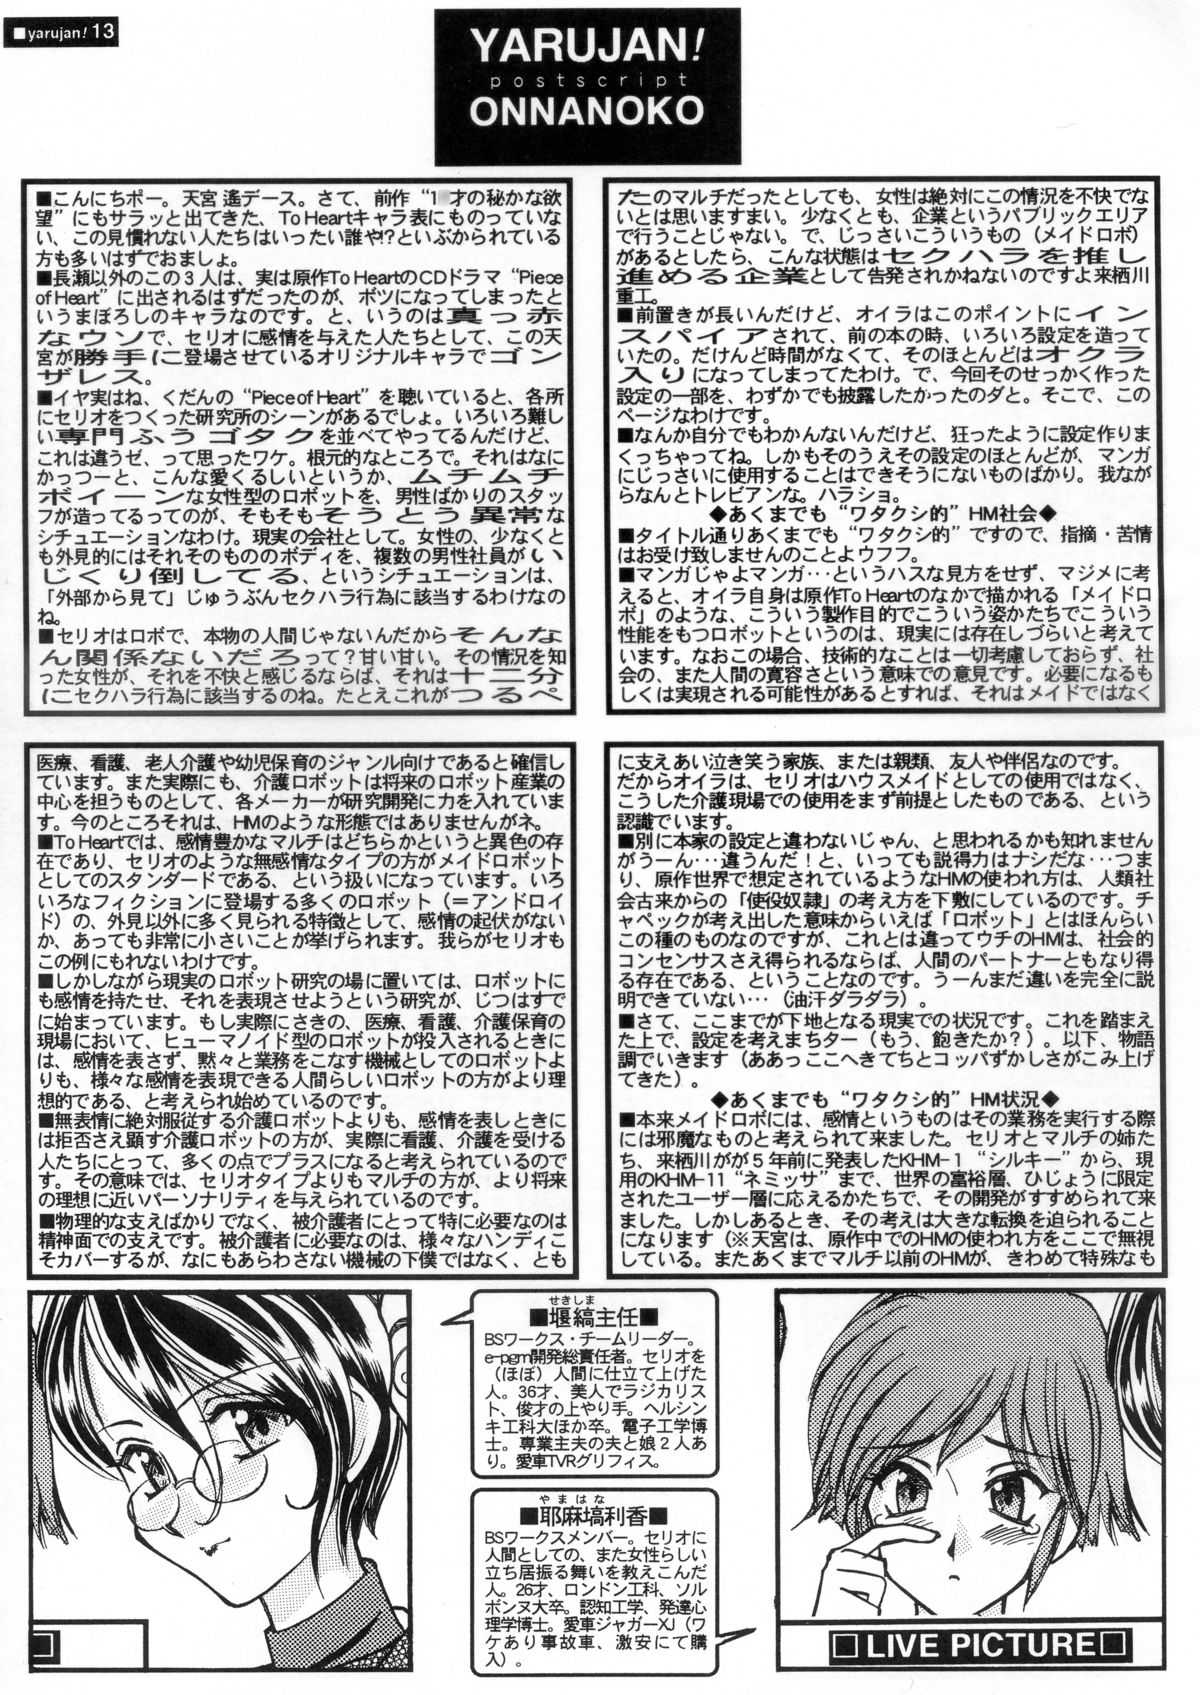 [Ananomiya Haruka]『1○才の密かな欲望』『やるじゃん女の子』2種セット [Ananomiya Haruka]『1○才の密かな欲望』『やるじゃん女の子』2種セット